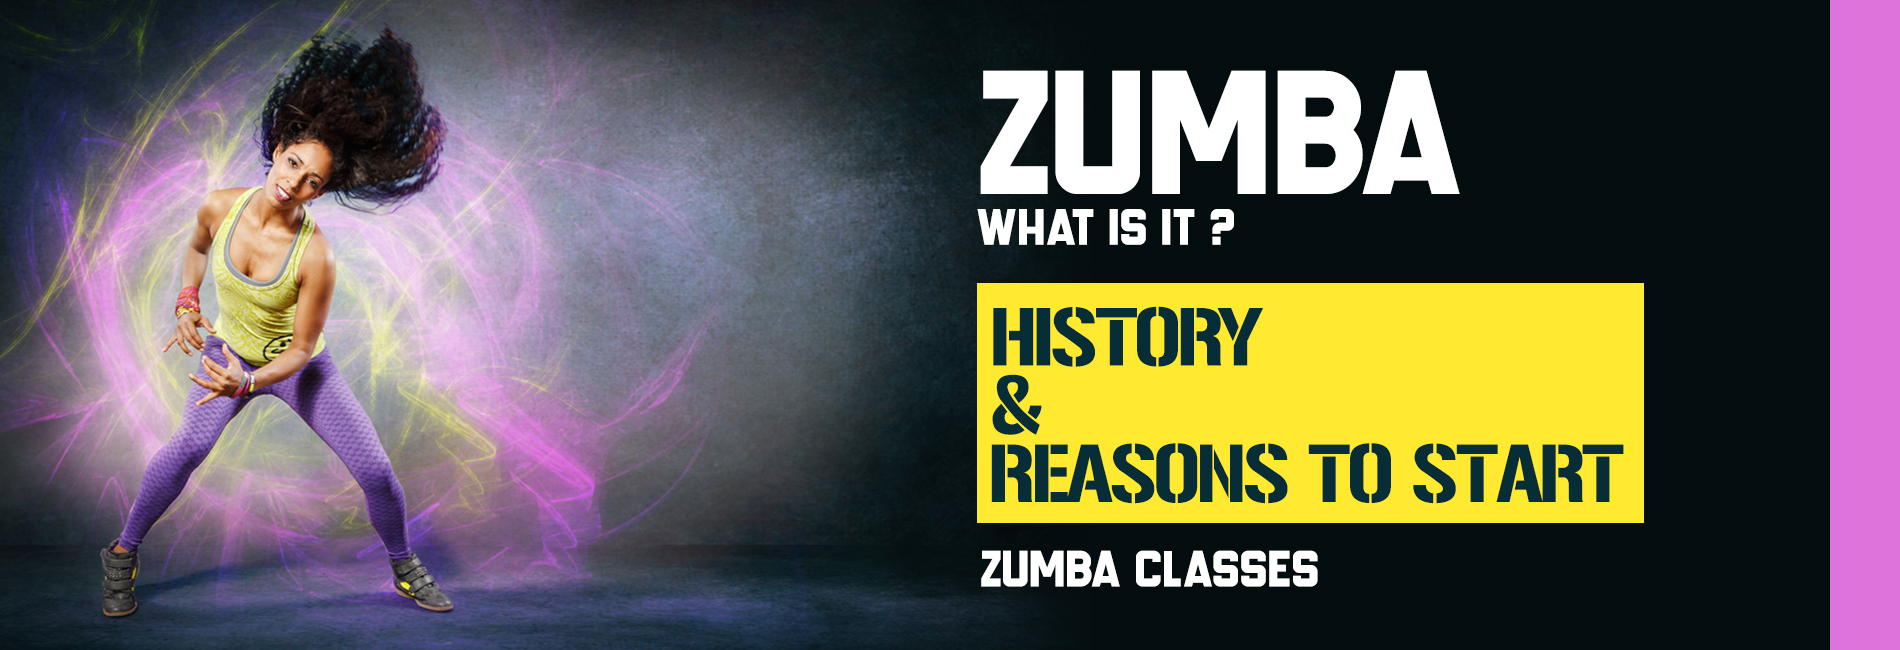 Zumba: What Is It, History & Reasons to Start Zumba Classes